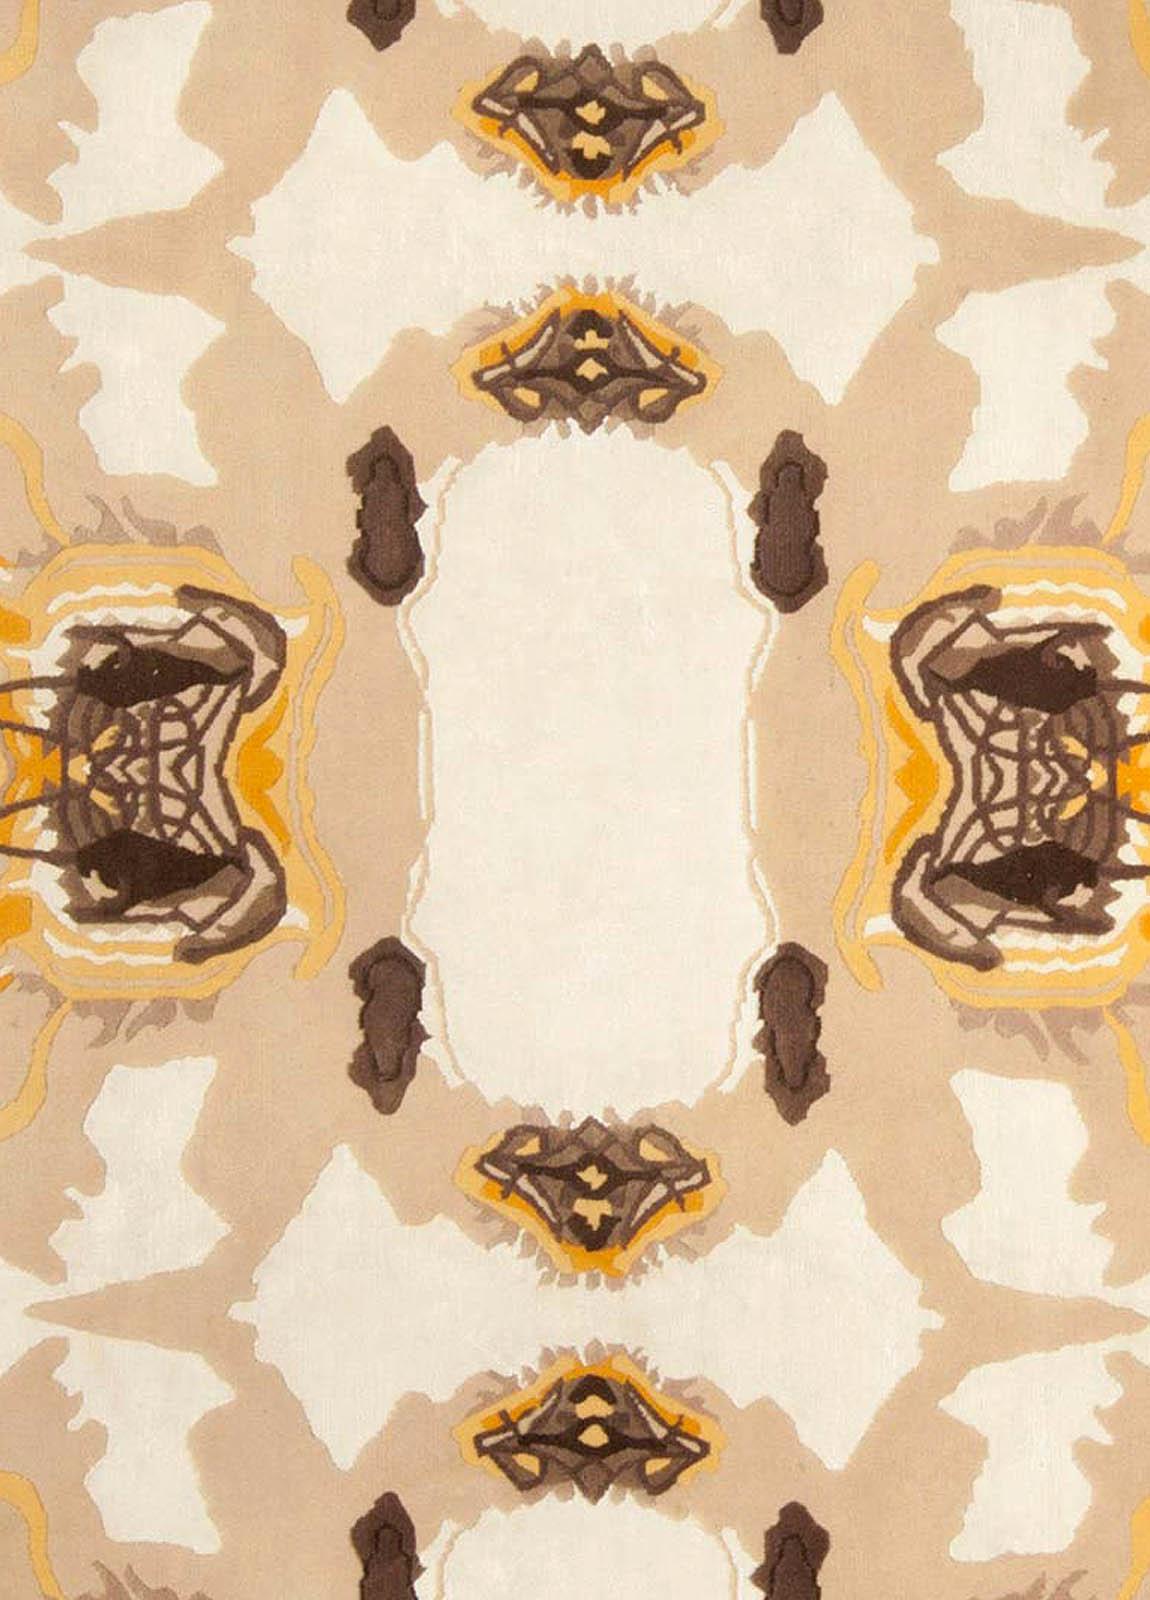 Modern abstract Eskayel-culebra rug for Doris Leslie Blau.
Size: 9'0